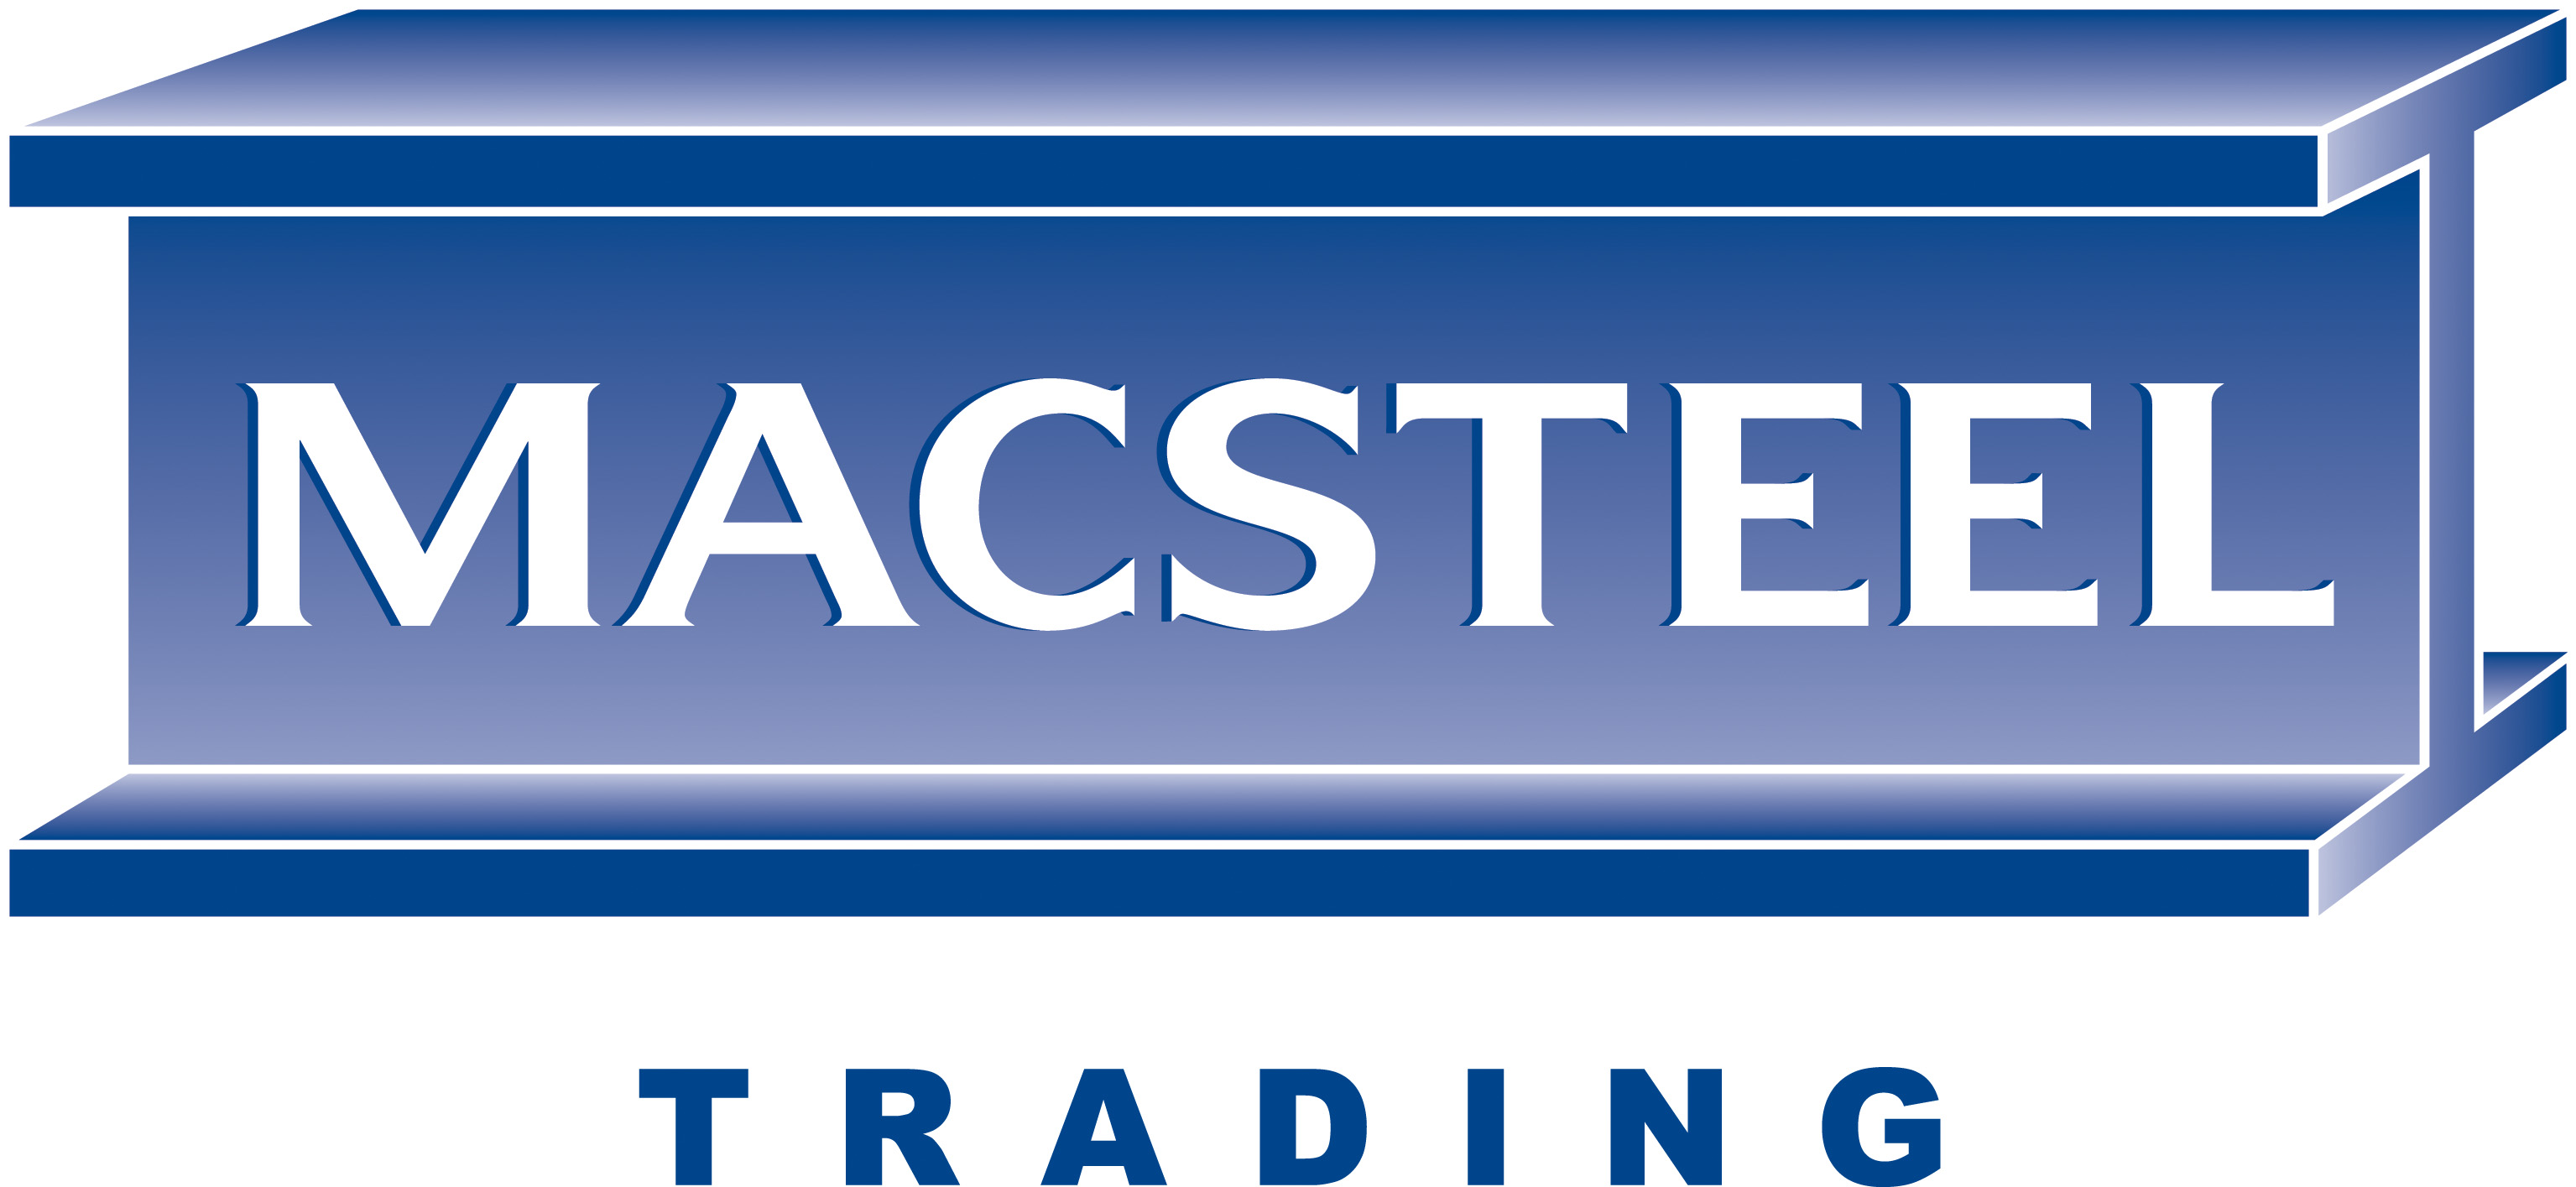 Macsteel Trading -  Richards Bay logo